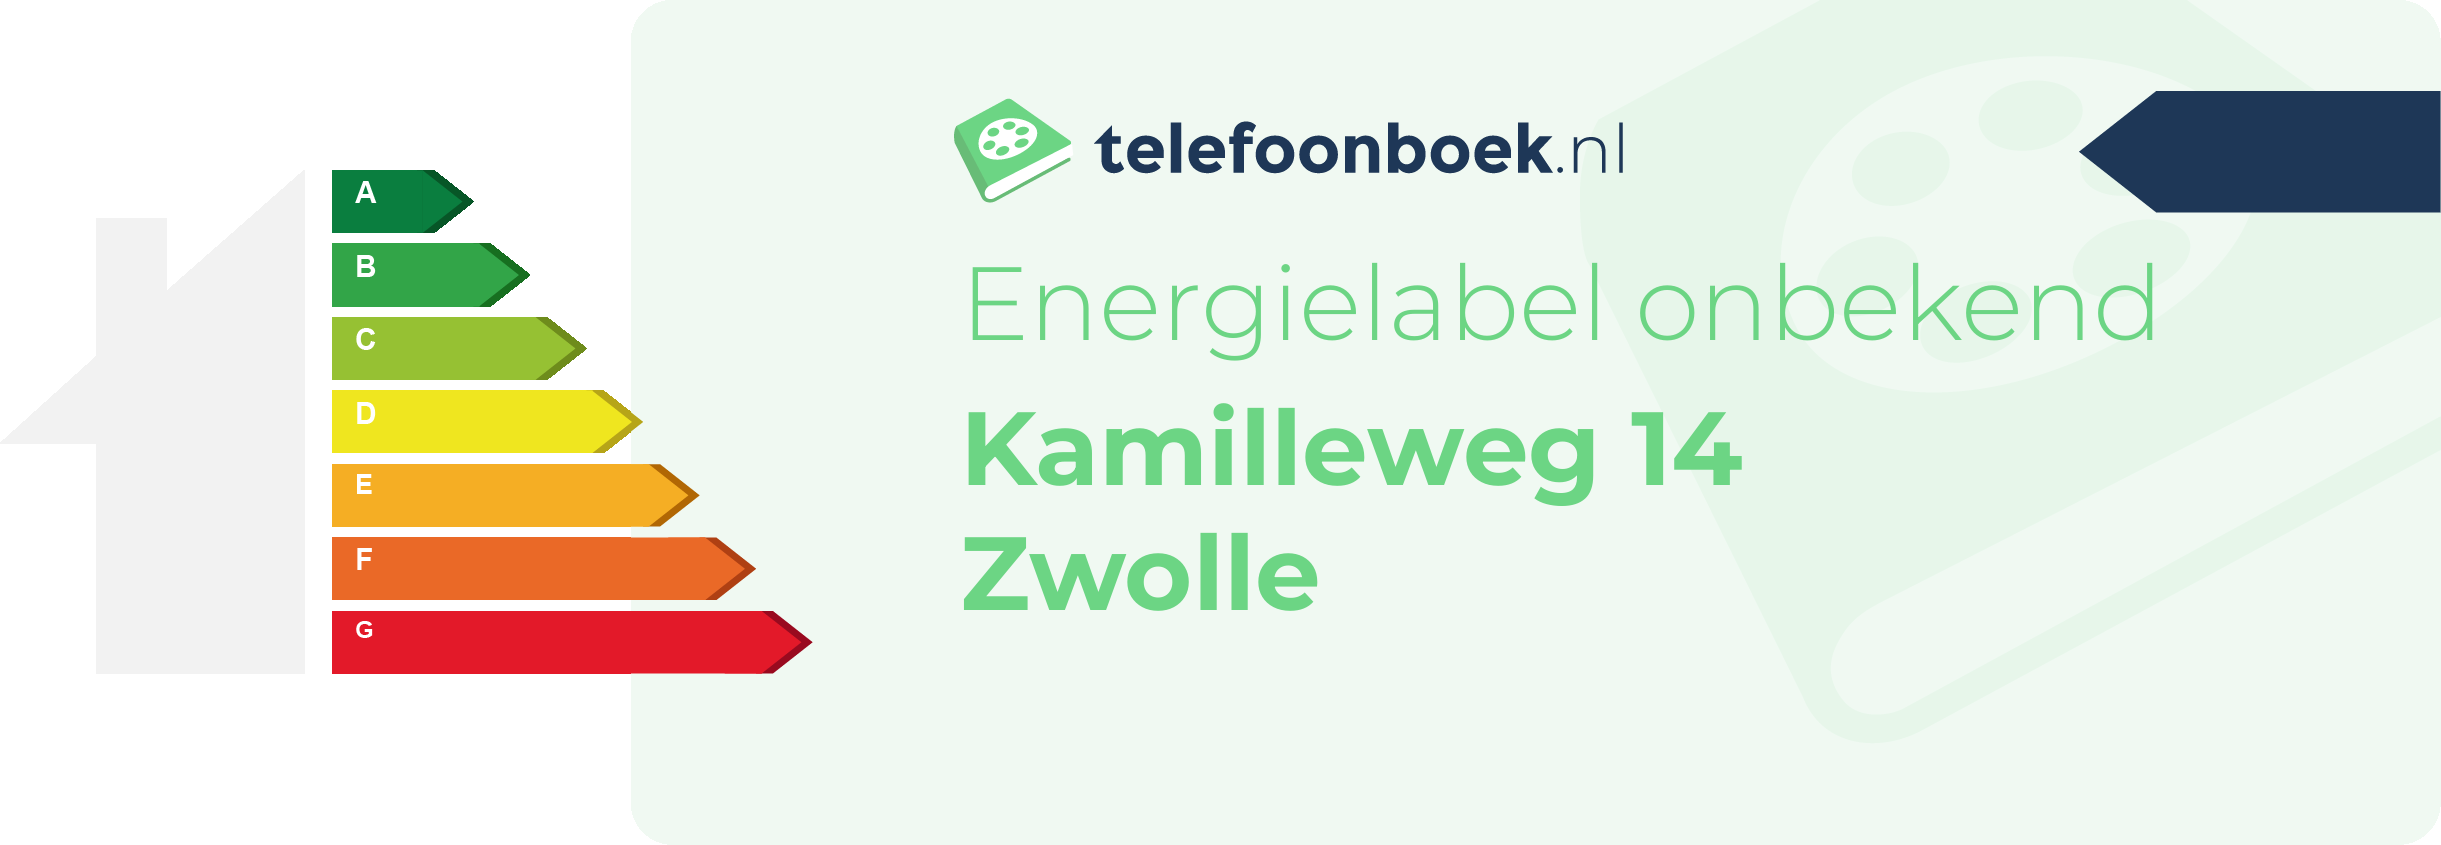 Energielabel Kamilleweg 14 Zwolle